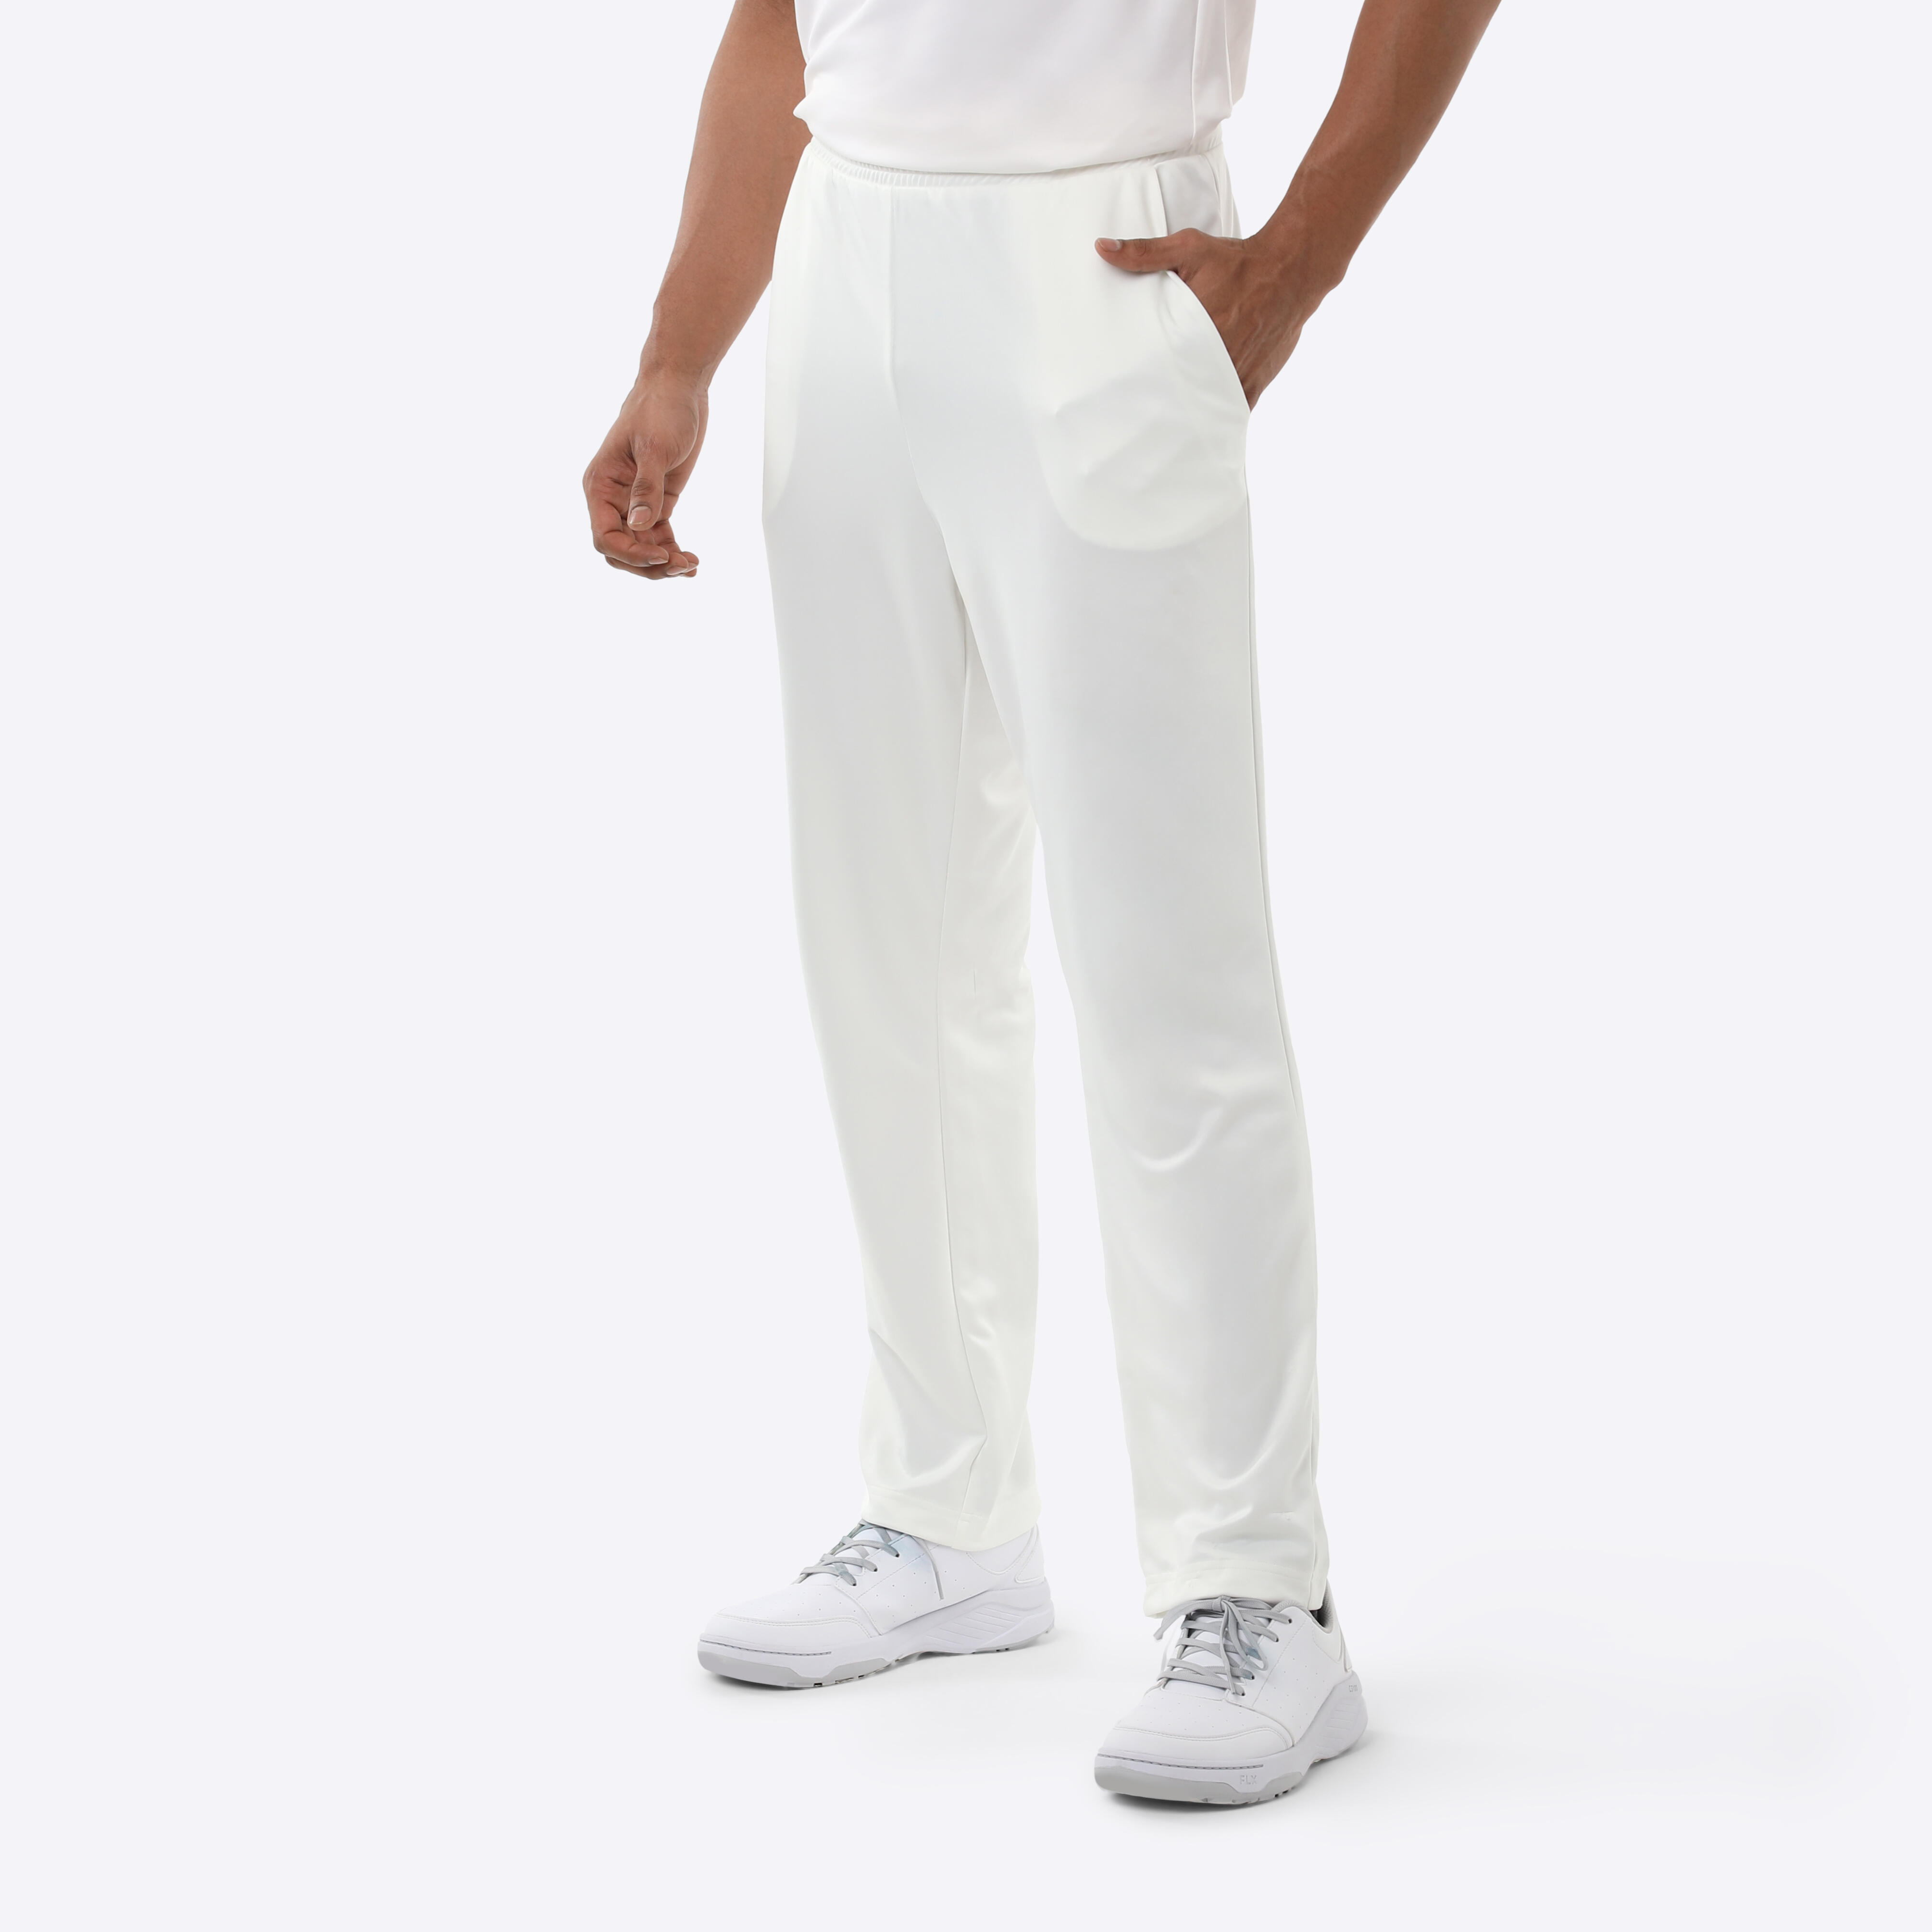 sportswear cricket kit cricket top cricket dress cricket white